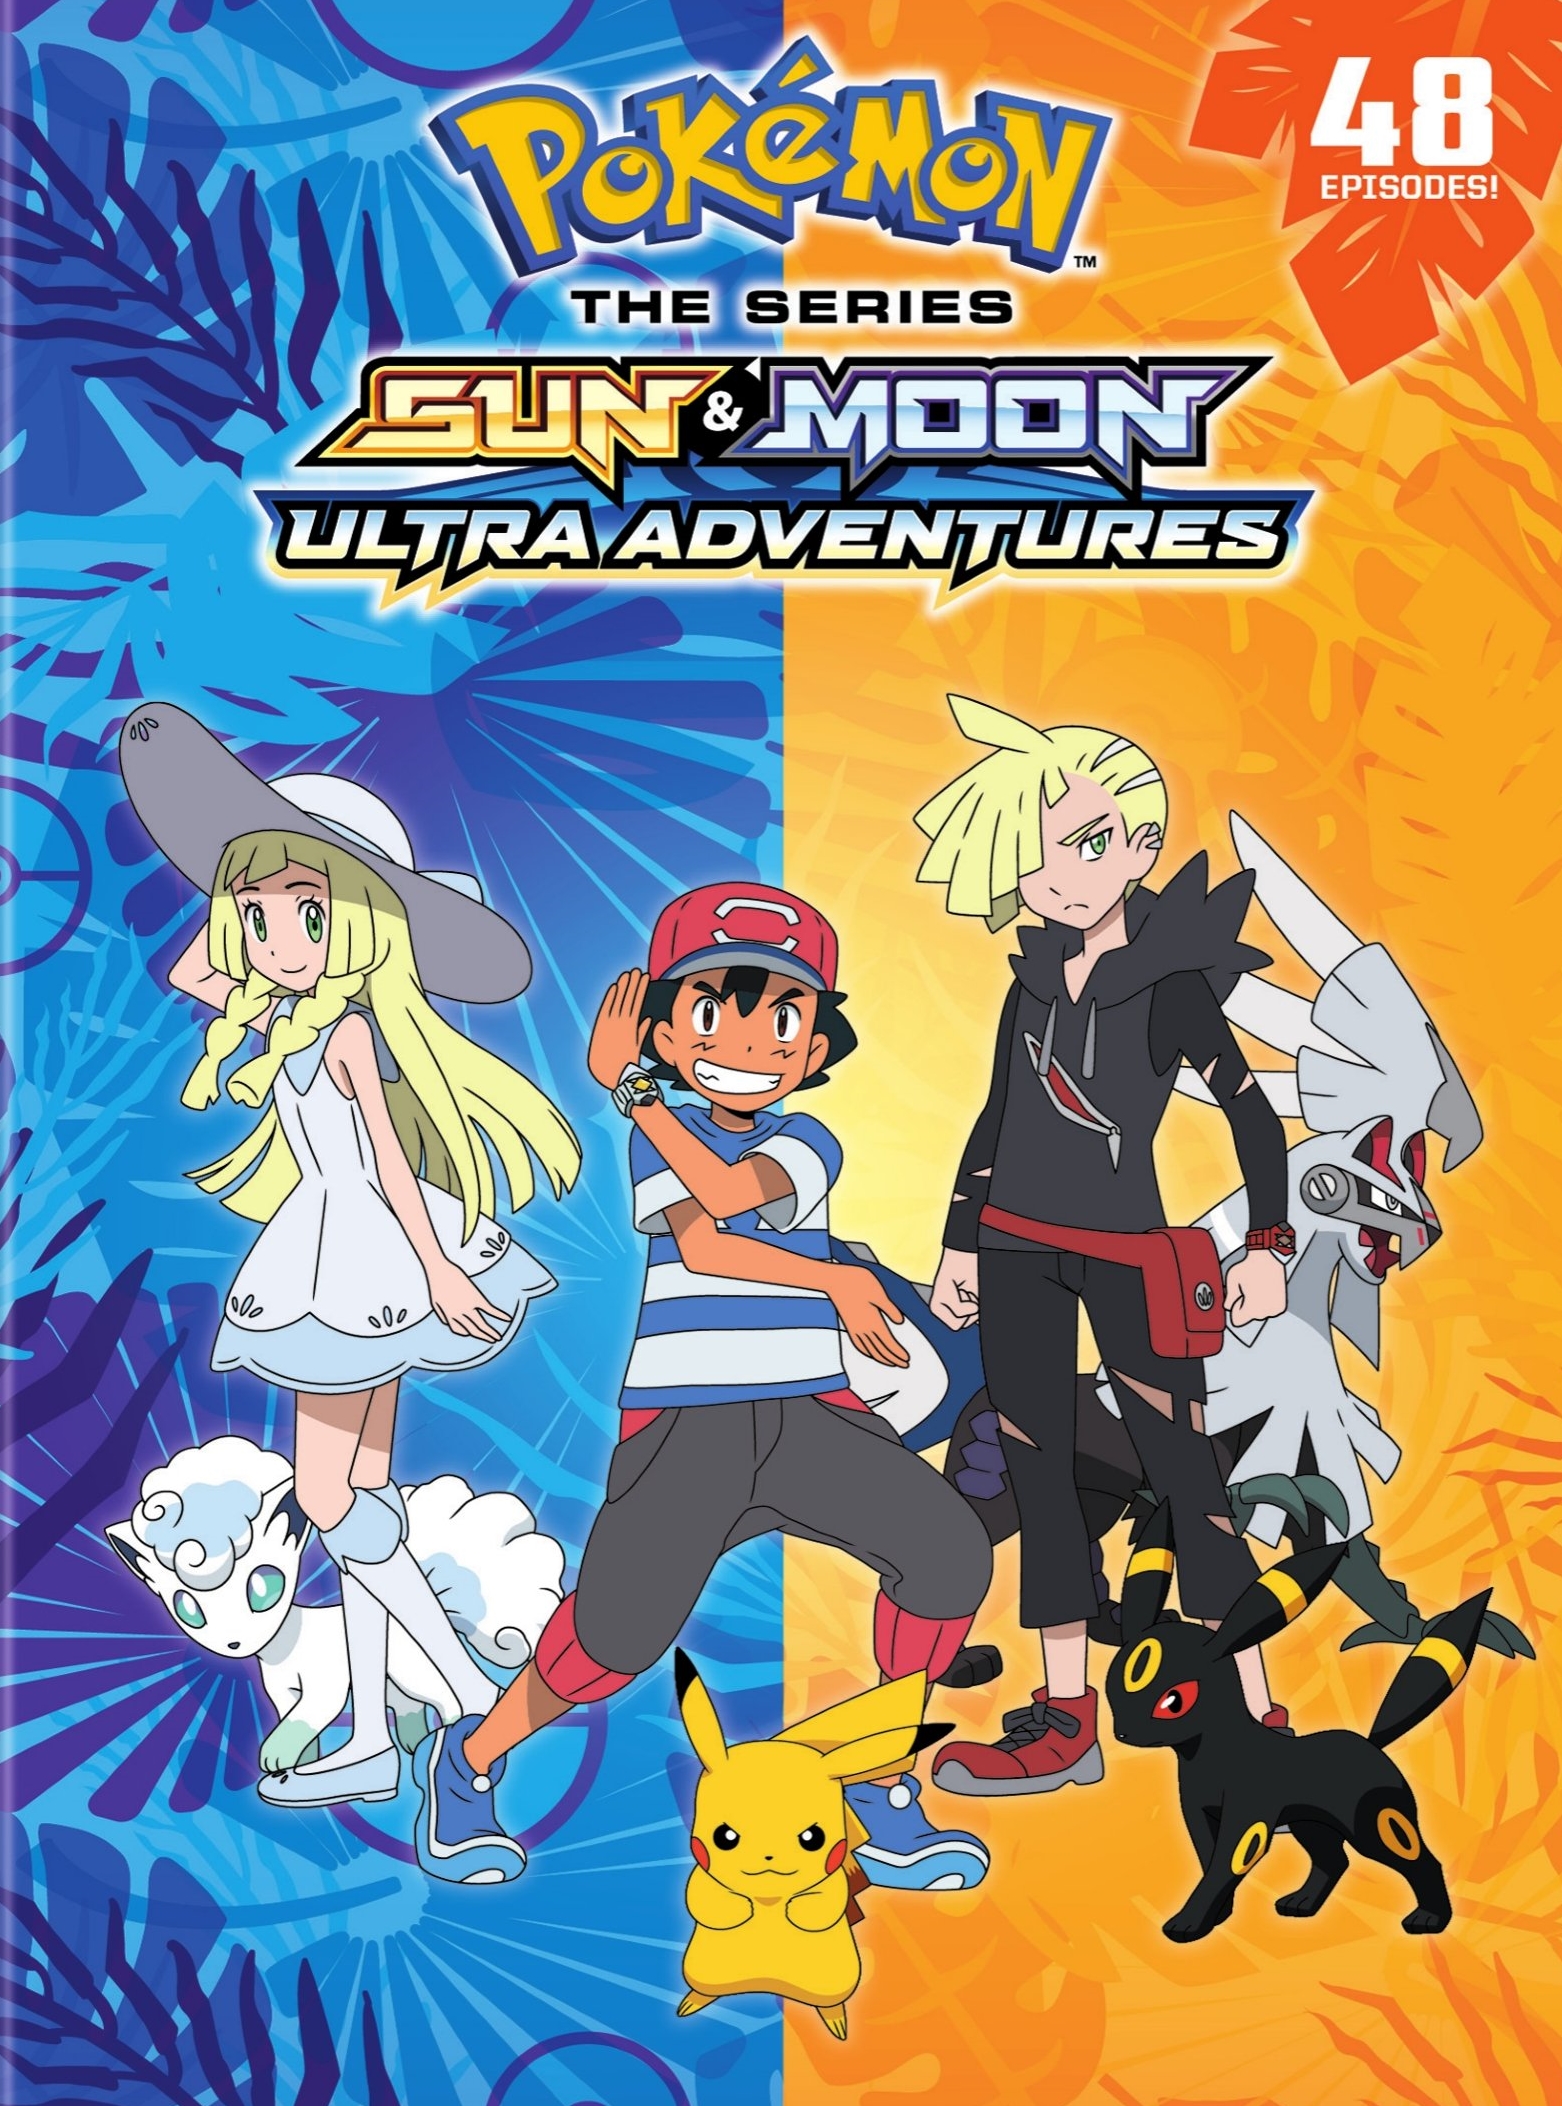 Pokémon Ultra Sun e Ultra Moon